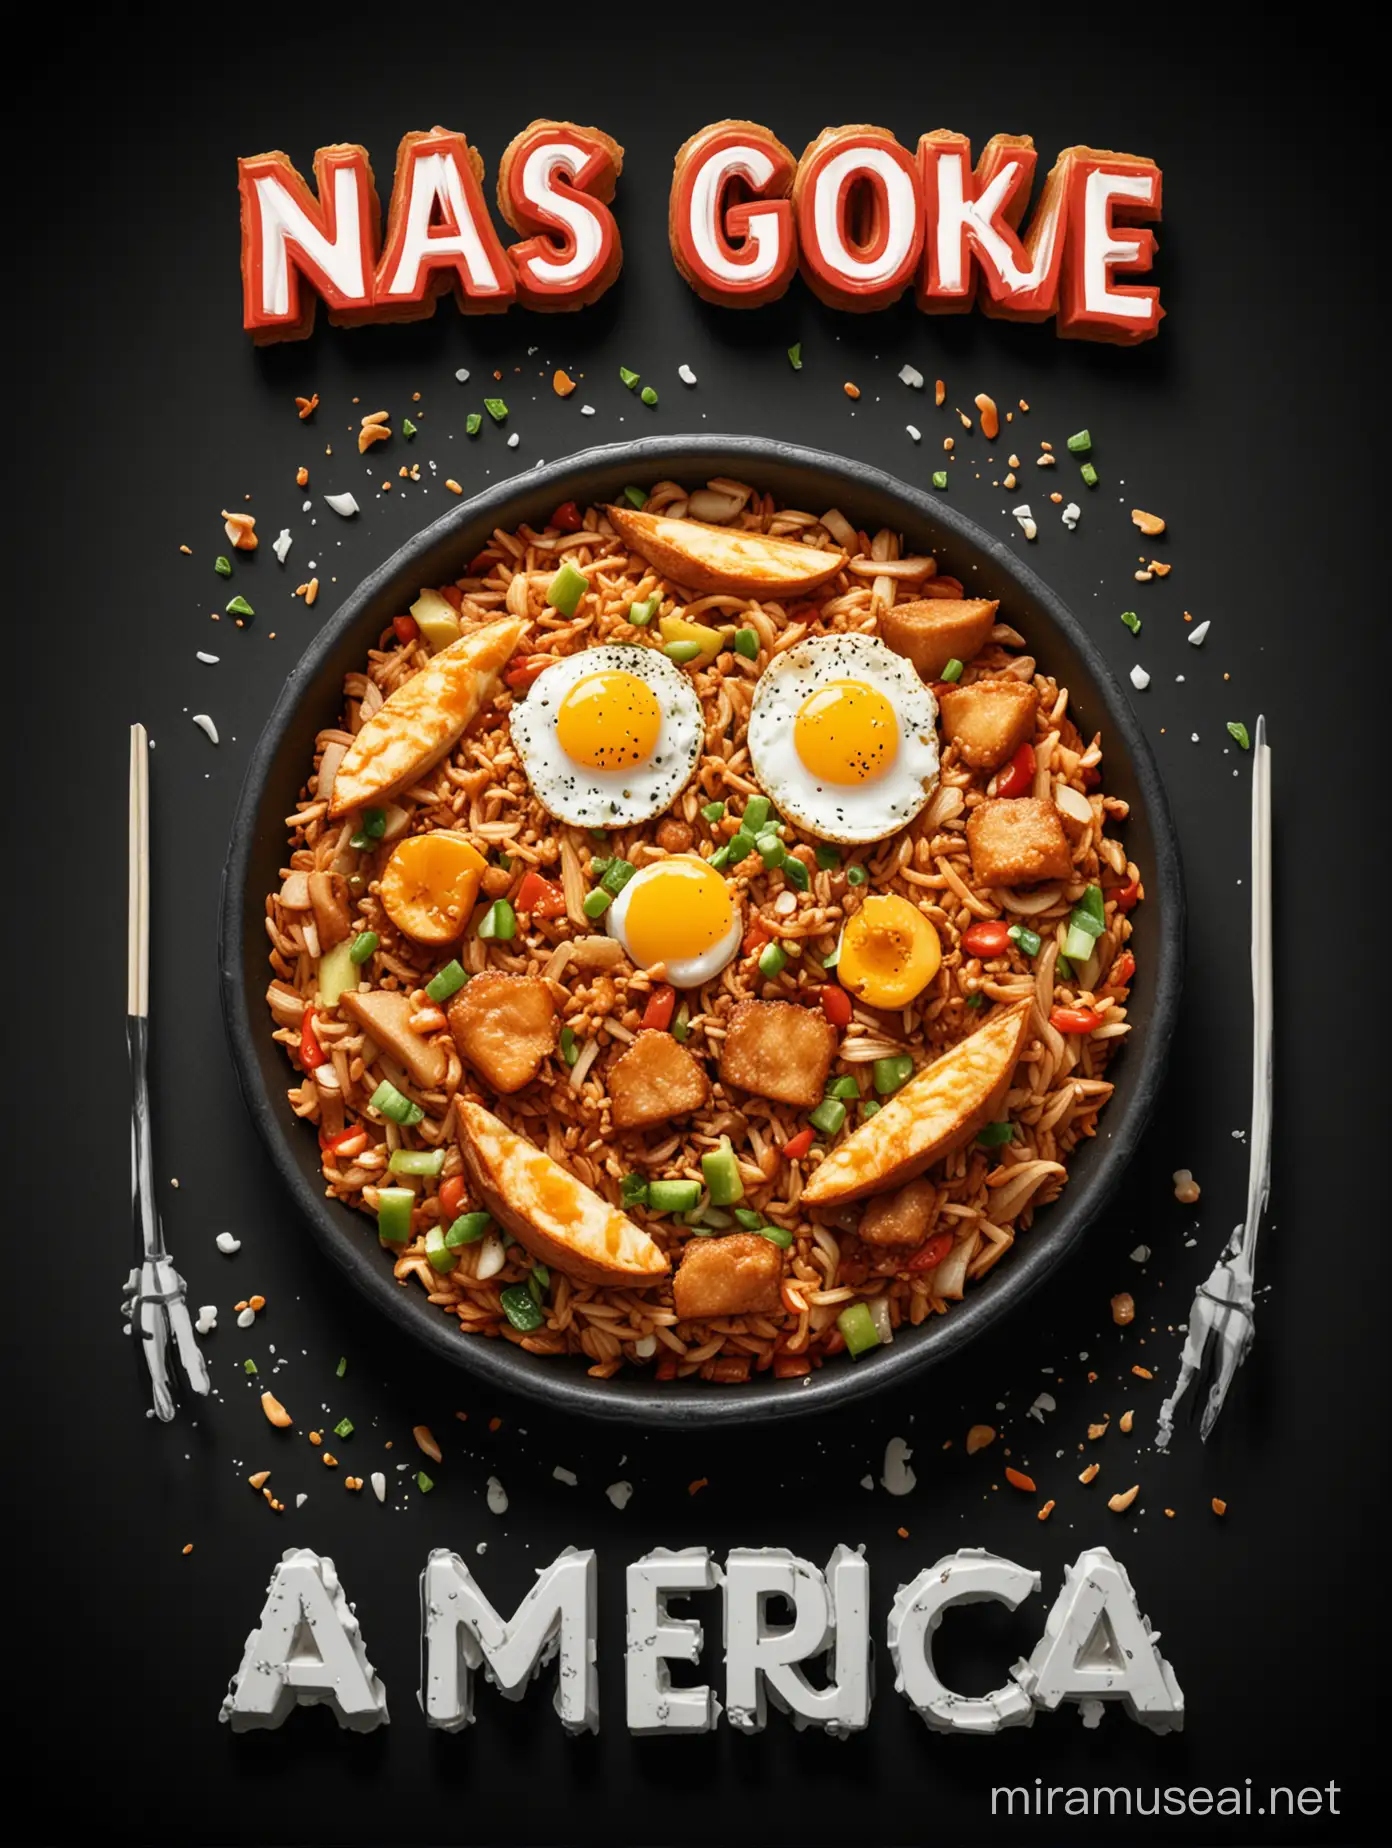 Nasi Goreng America Bold Cartoon Text Against Dramatic Black Background